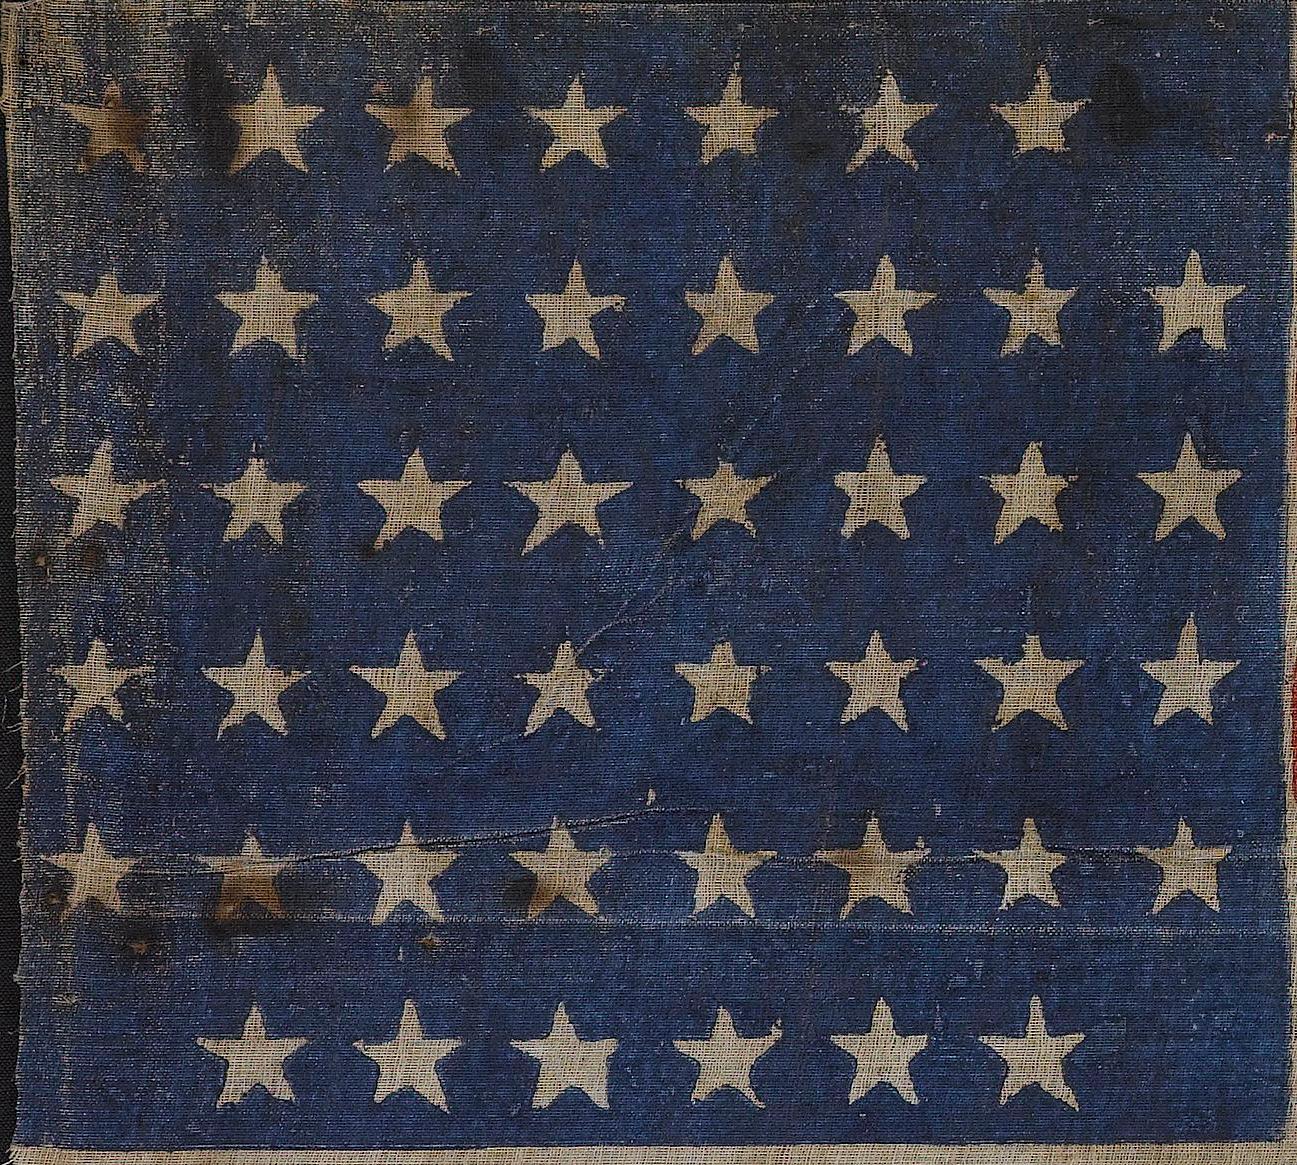 45 star american flag value